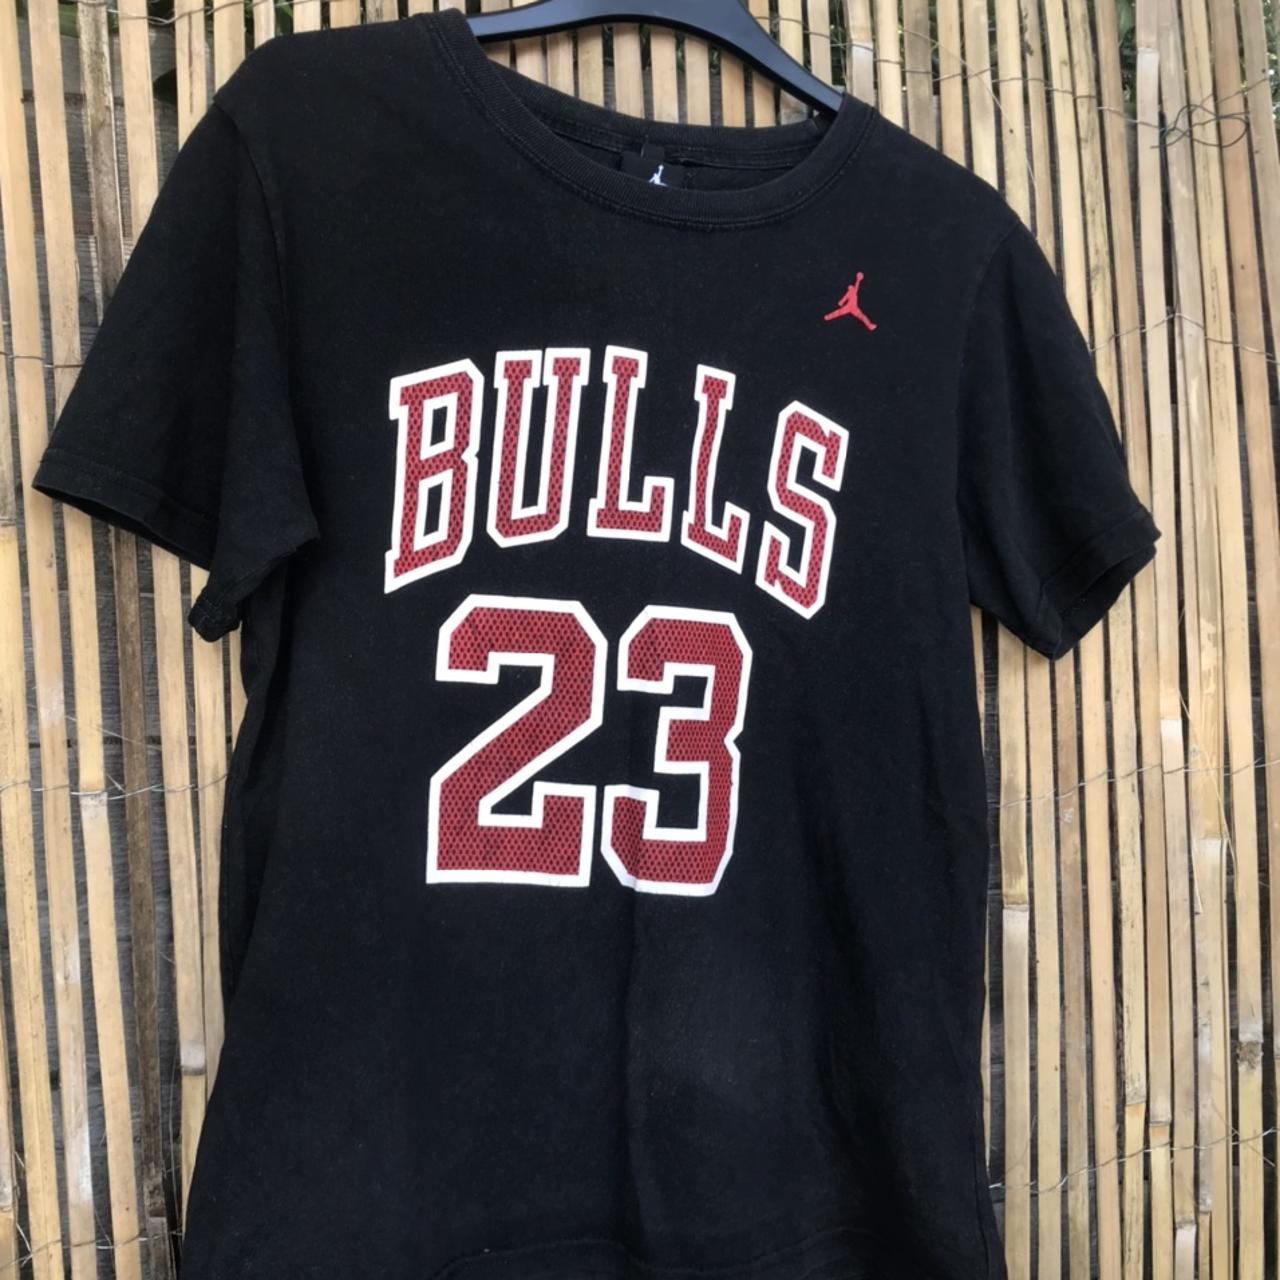 bulls 23 shirt